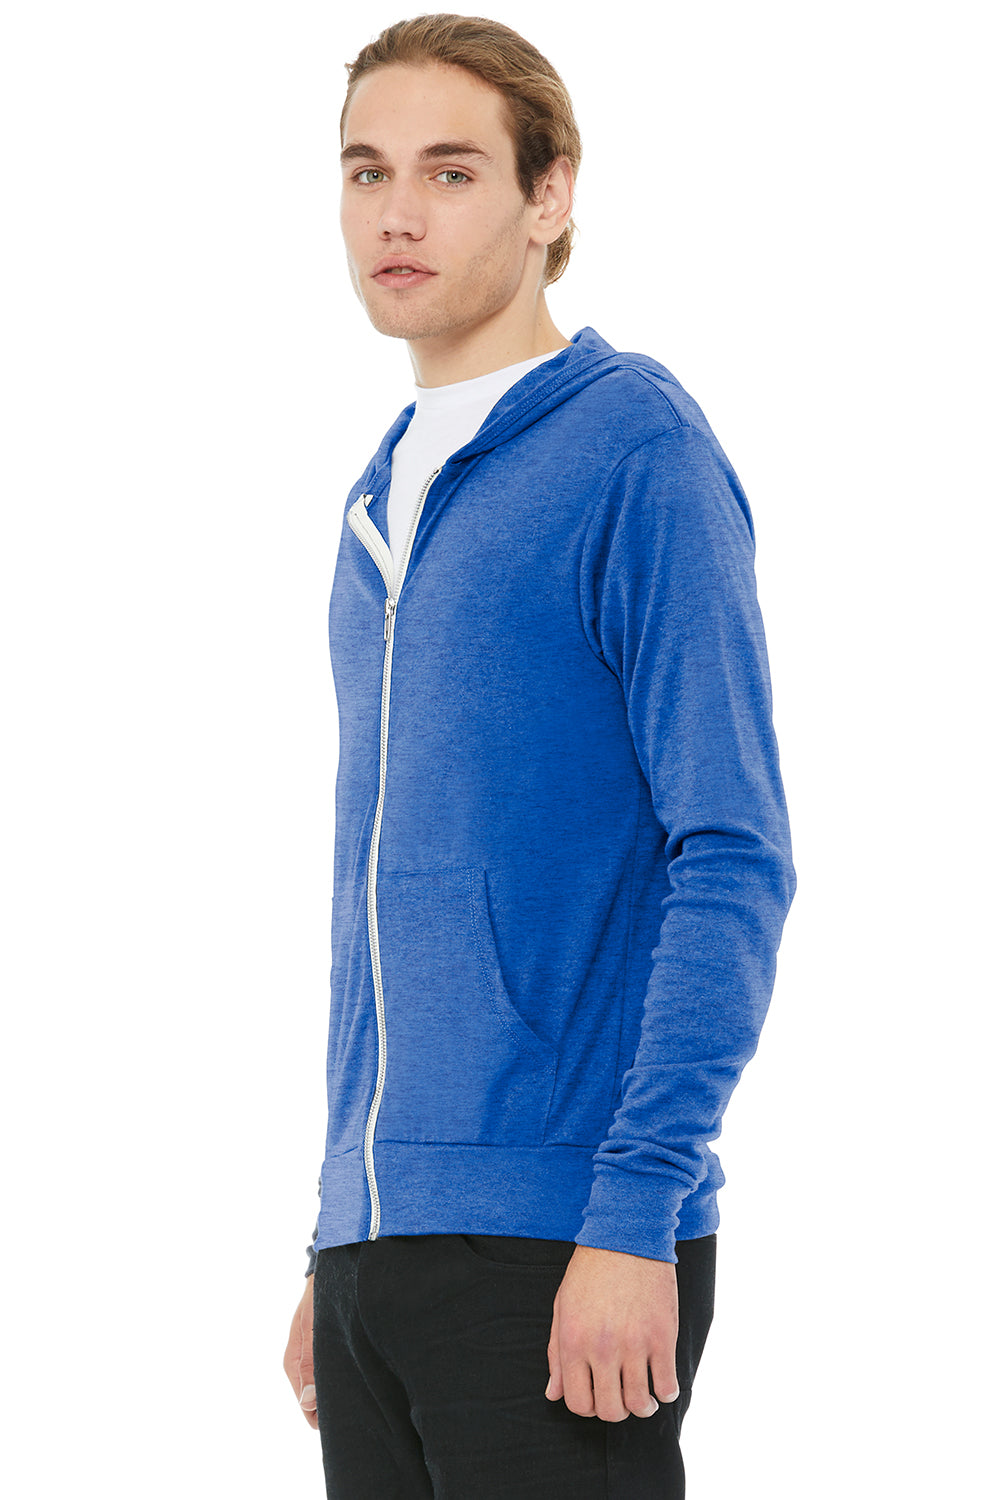 Bella + Canvas BC3939/3939 Mens Full Zip Long Sleeve Hooded T-Shirt Hoodie True Royal Blue Model 3Q